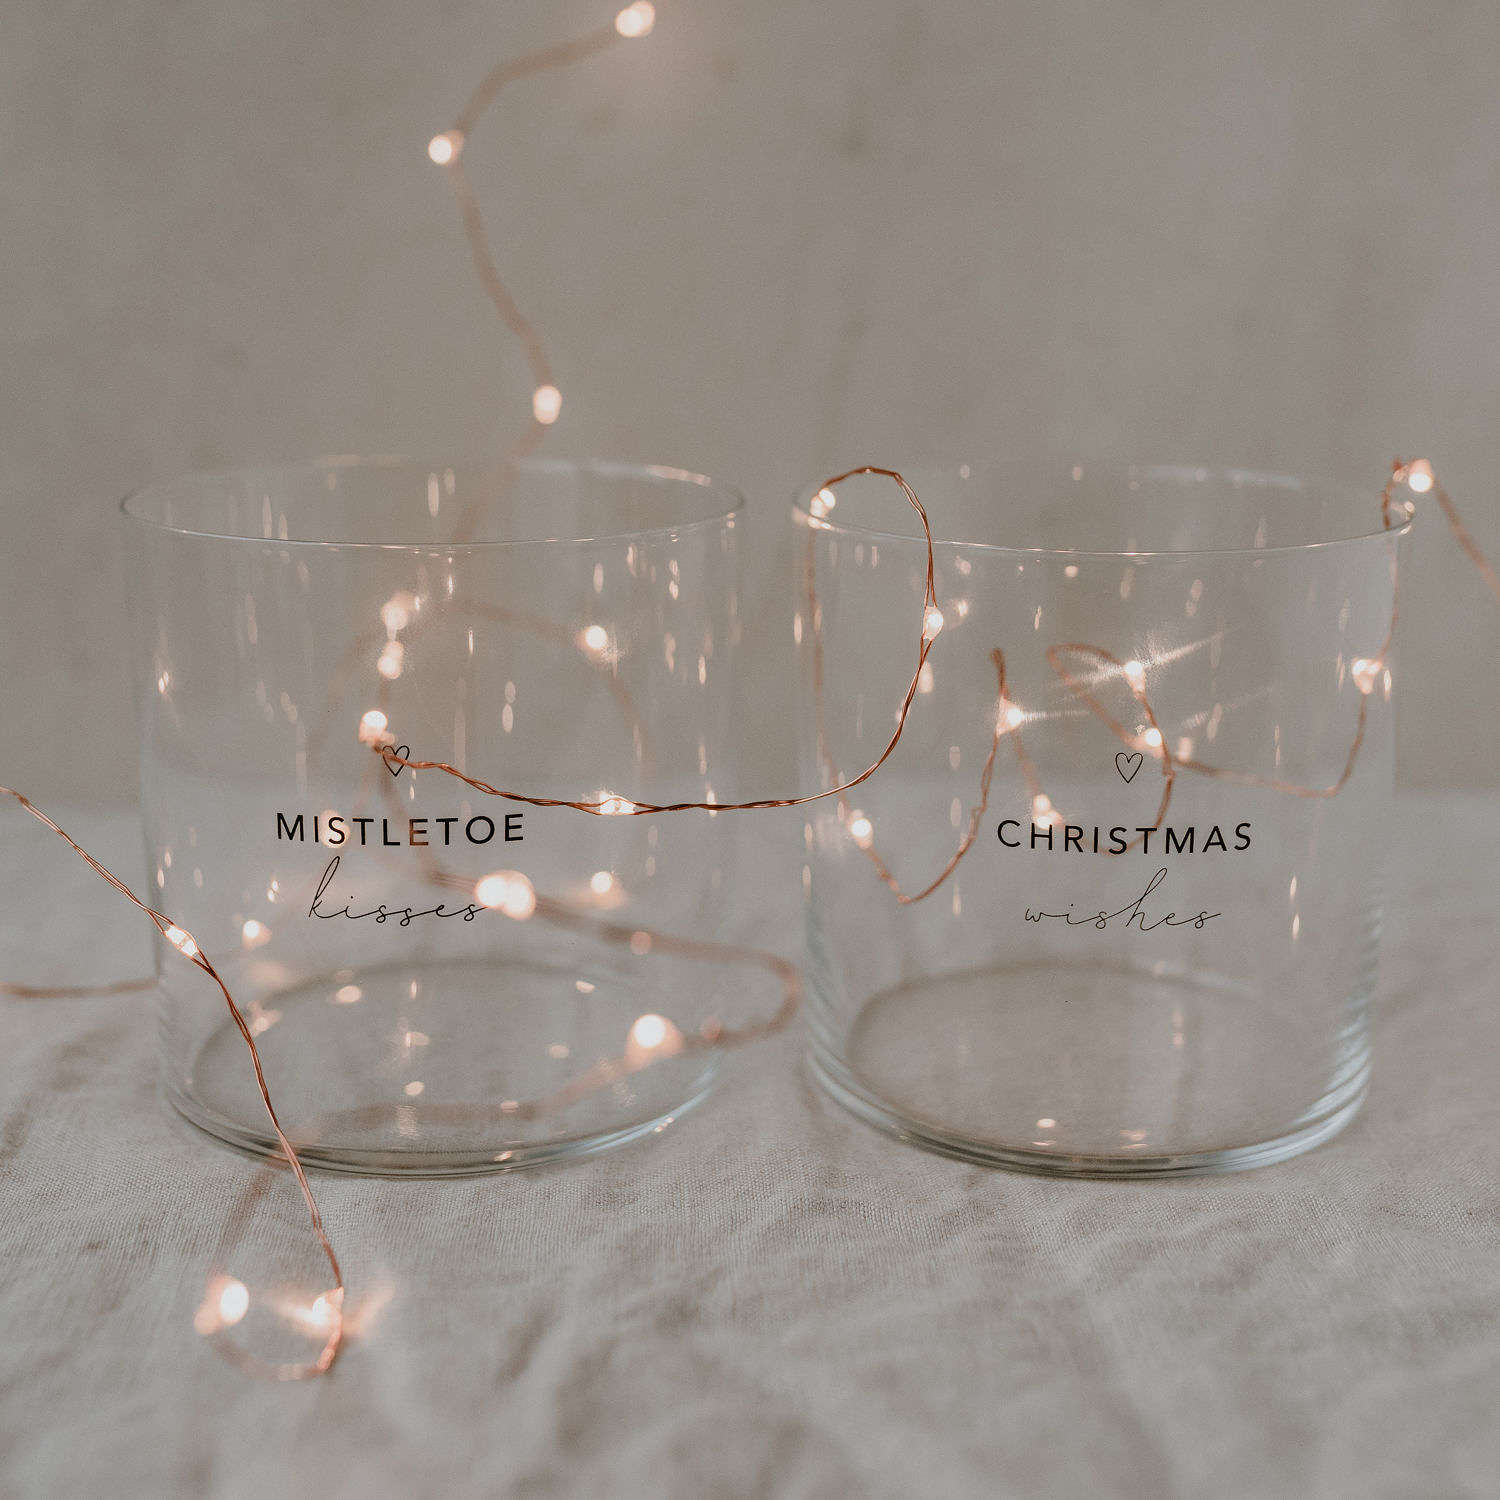 Christmas slogan design drinking glasses - set of 2